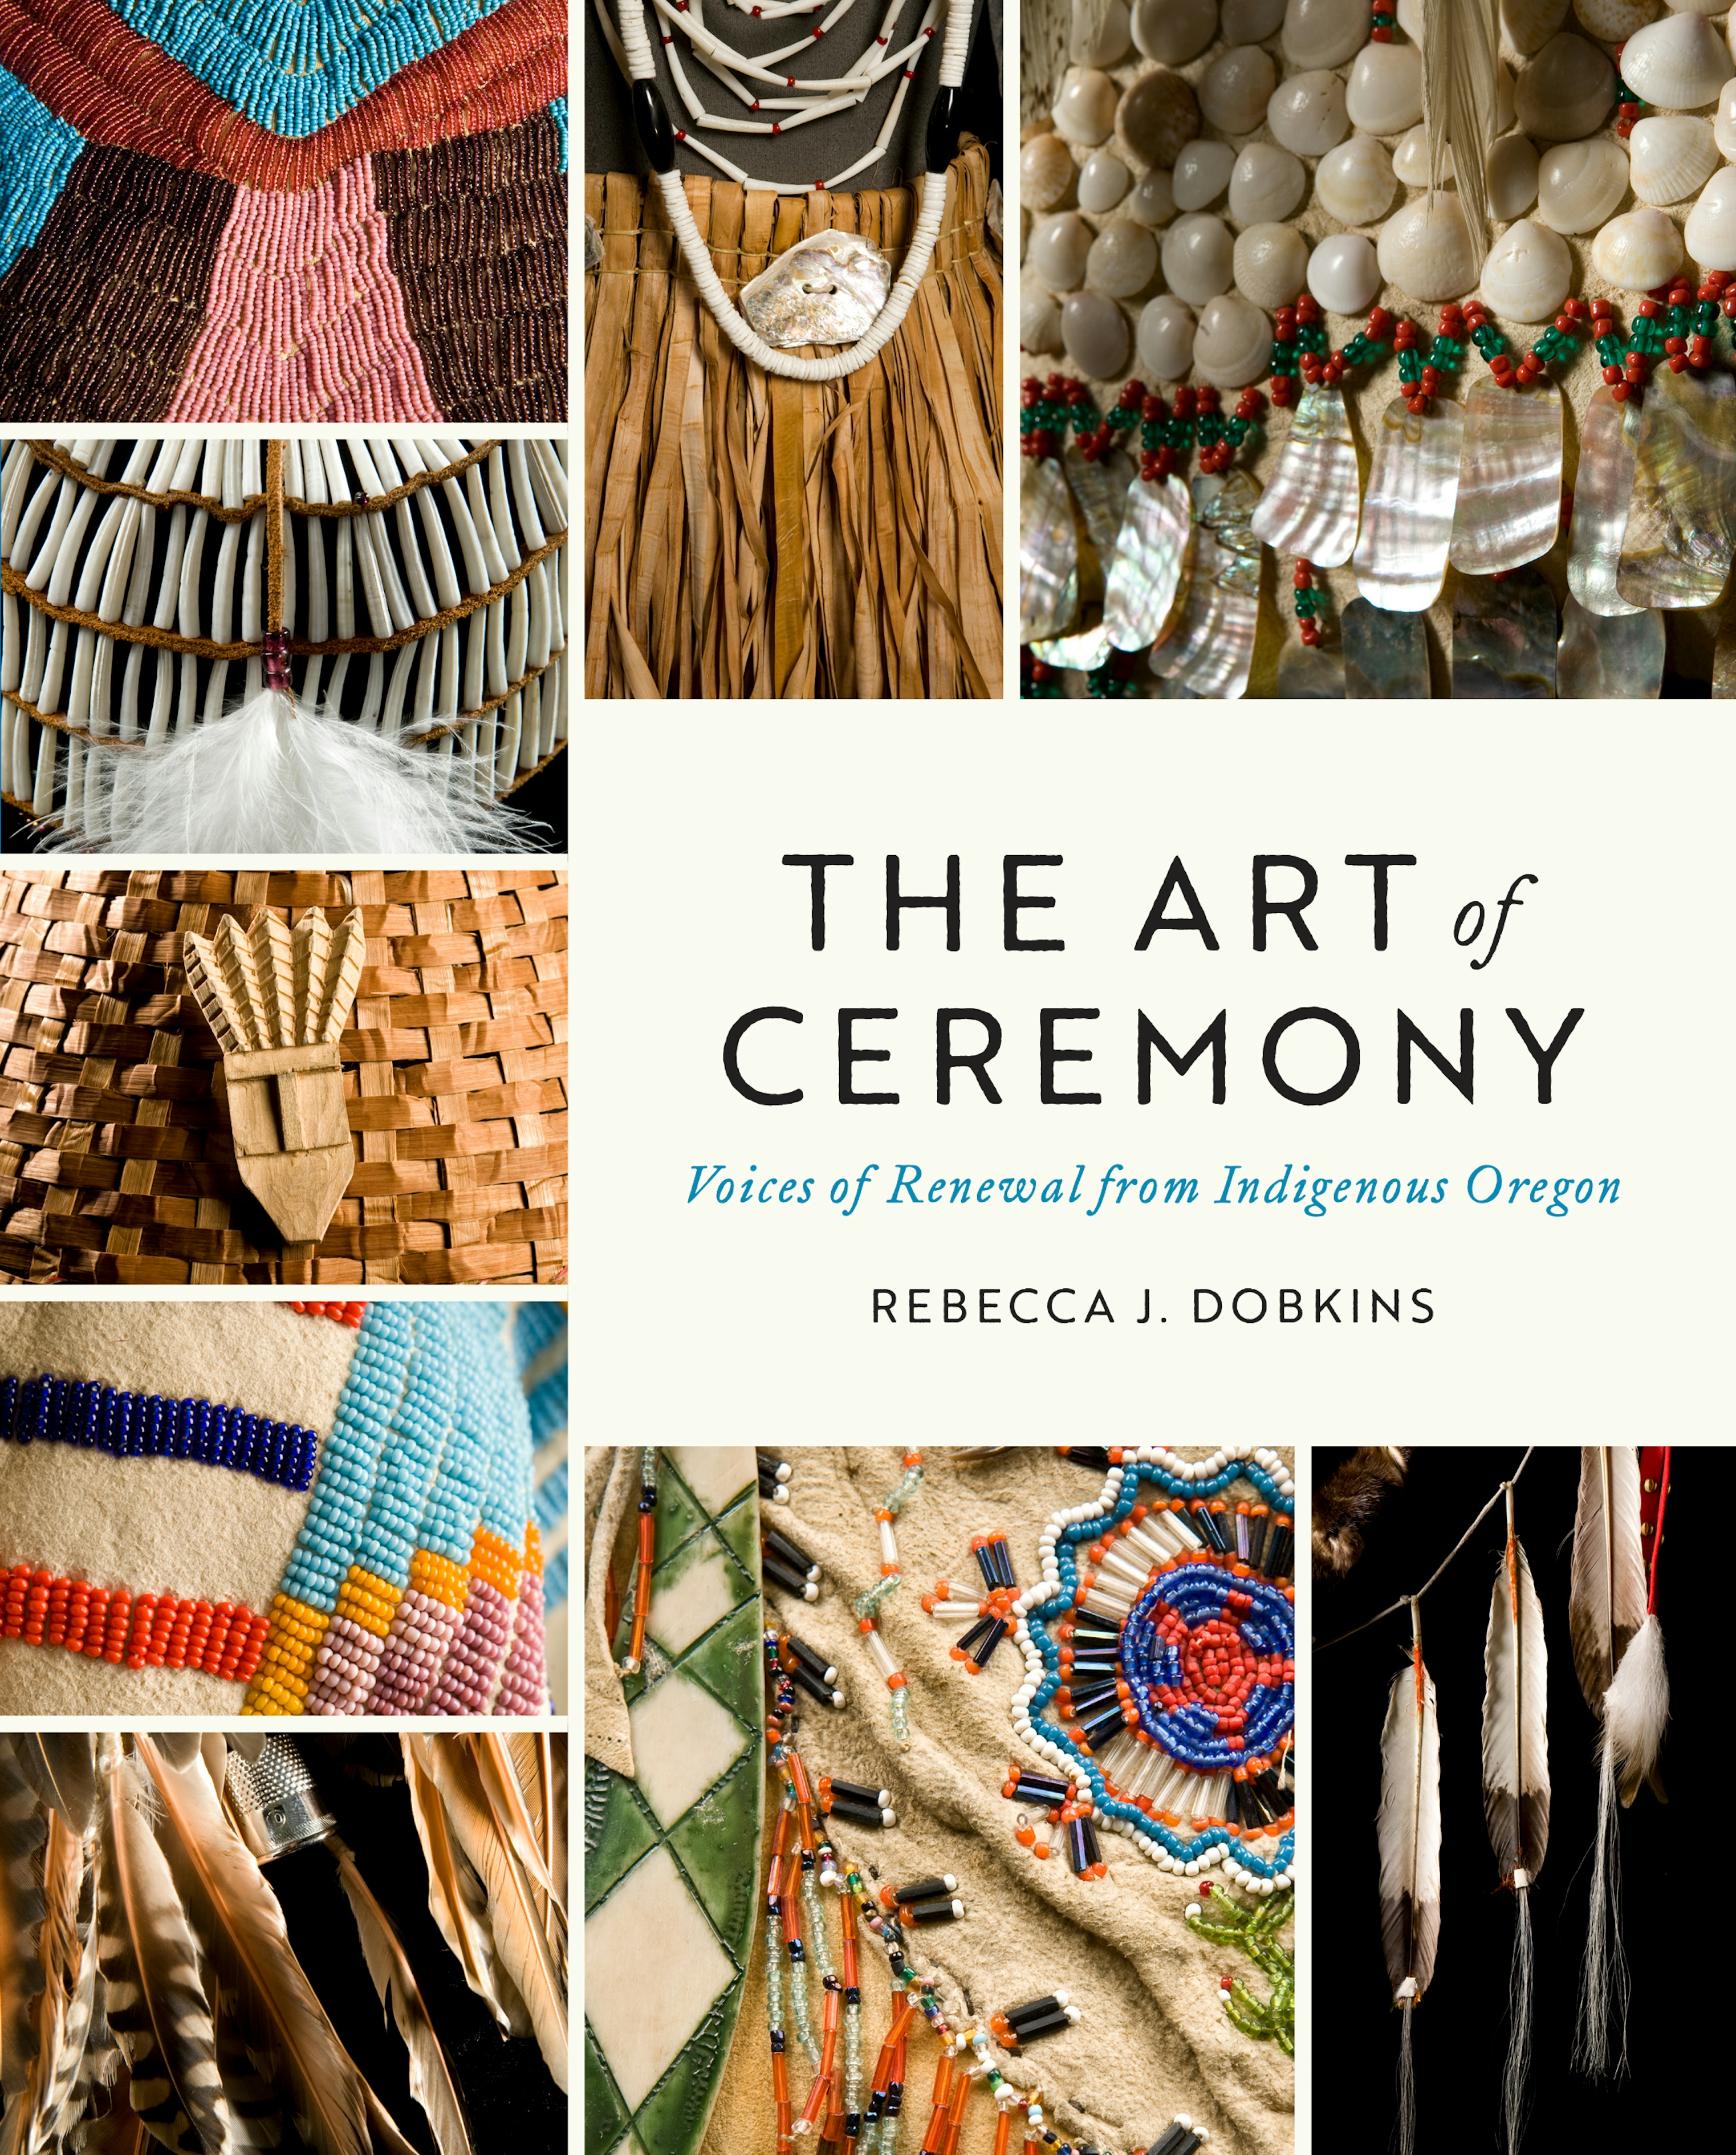 The Art of Ceremony